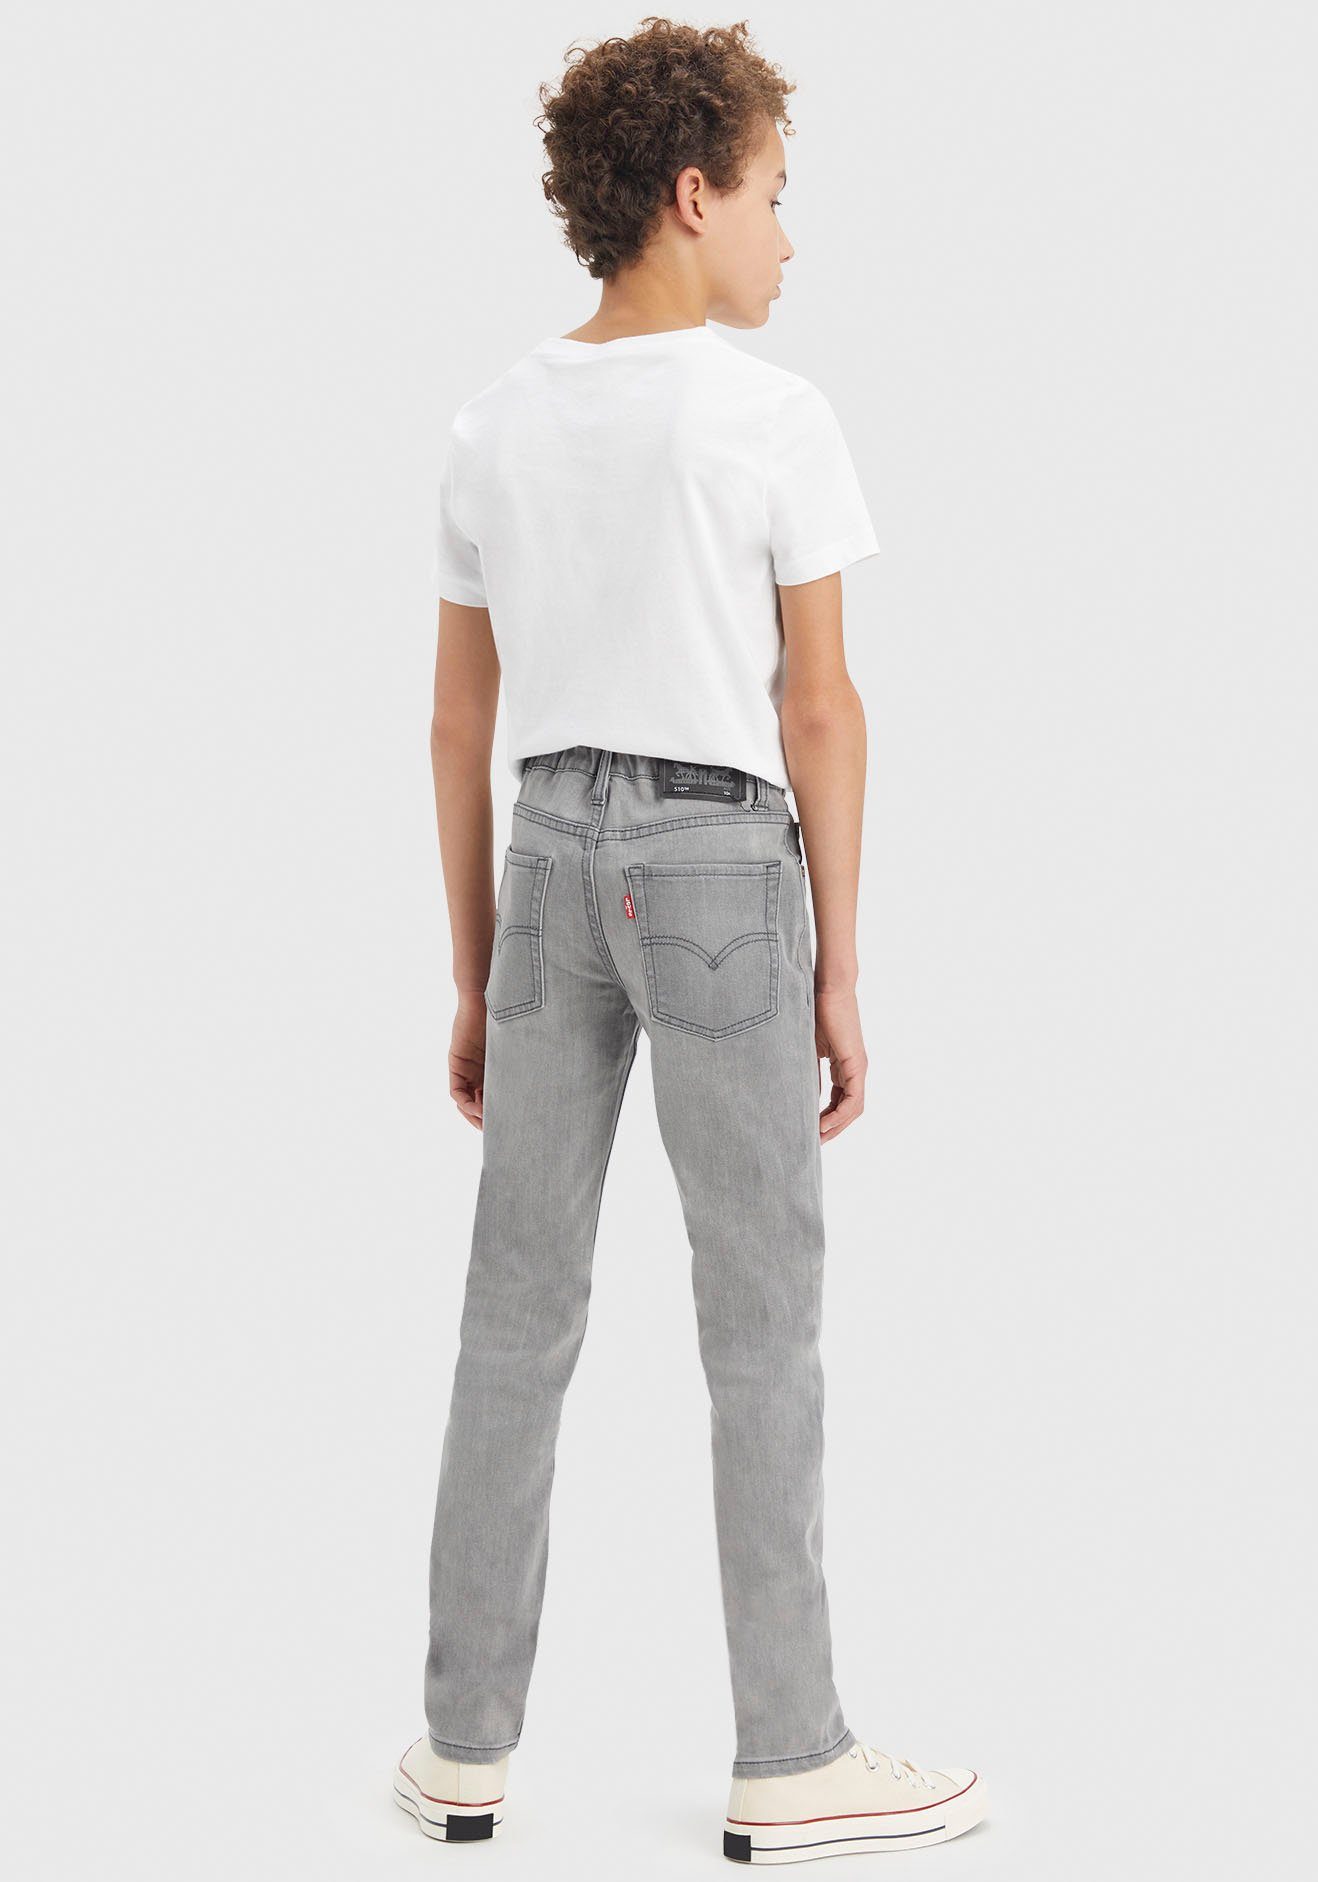 bett SKINNY grey JEANS BOYS is Skinny-fit-Jeans FIT Levi's® 510 for Kids